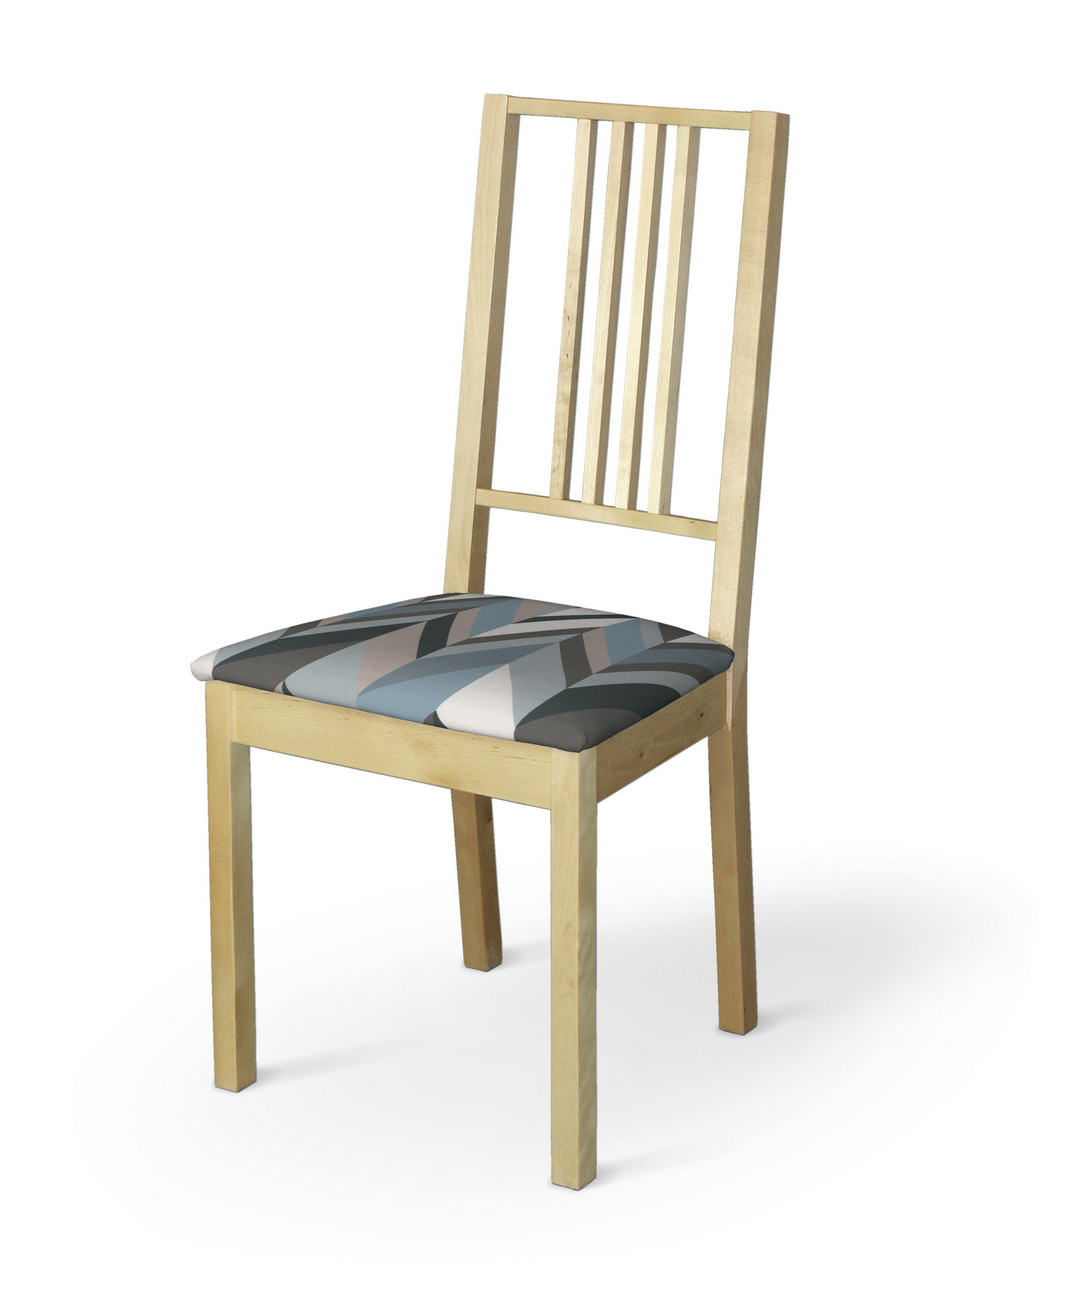 Dekoria Potah na sedák židle Börje, geometrický vzor modrá béžová, potah sedák židle Börje, Vintage 70's, 143-54